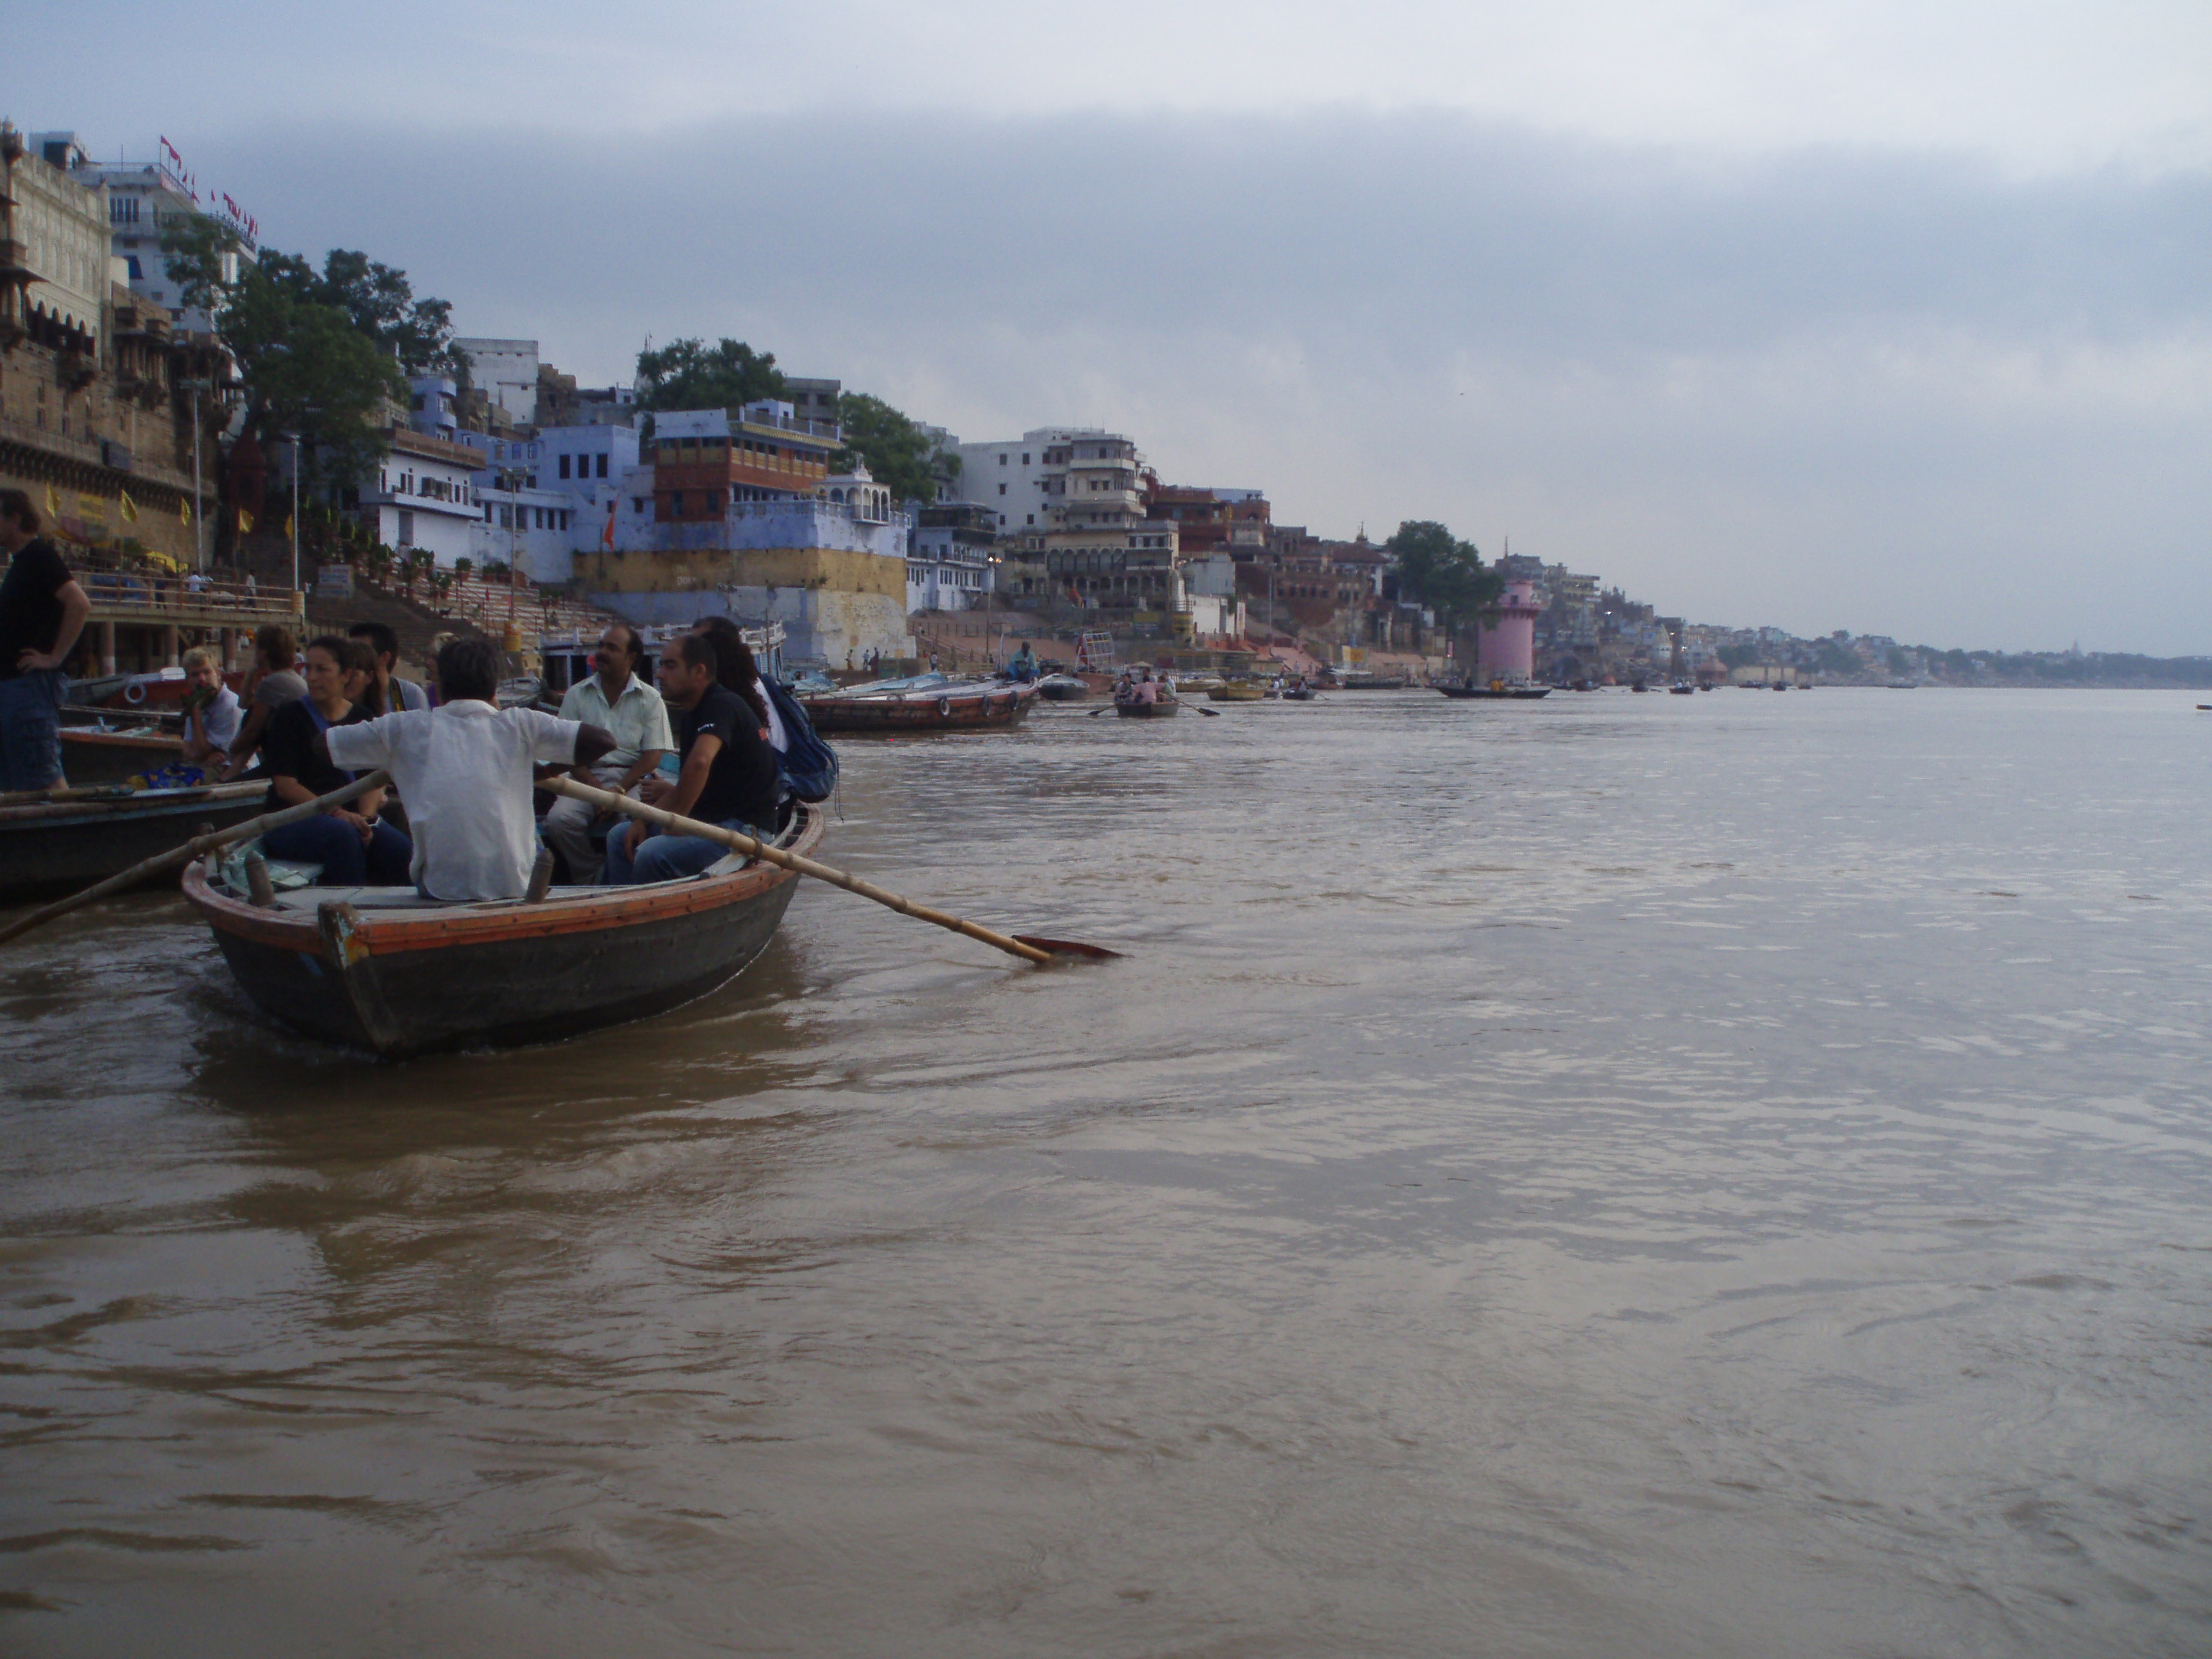 Amanecer en el Ganges @Doris Casares